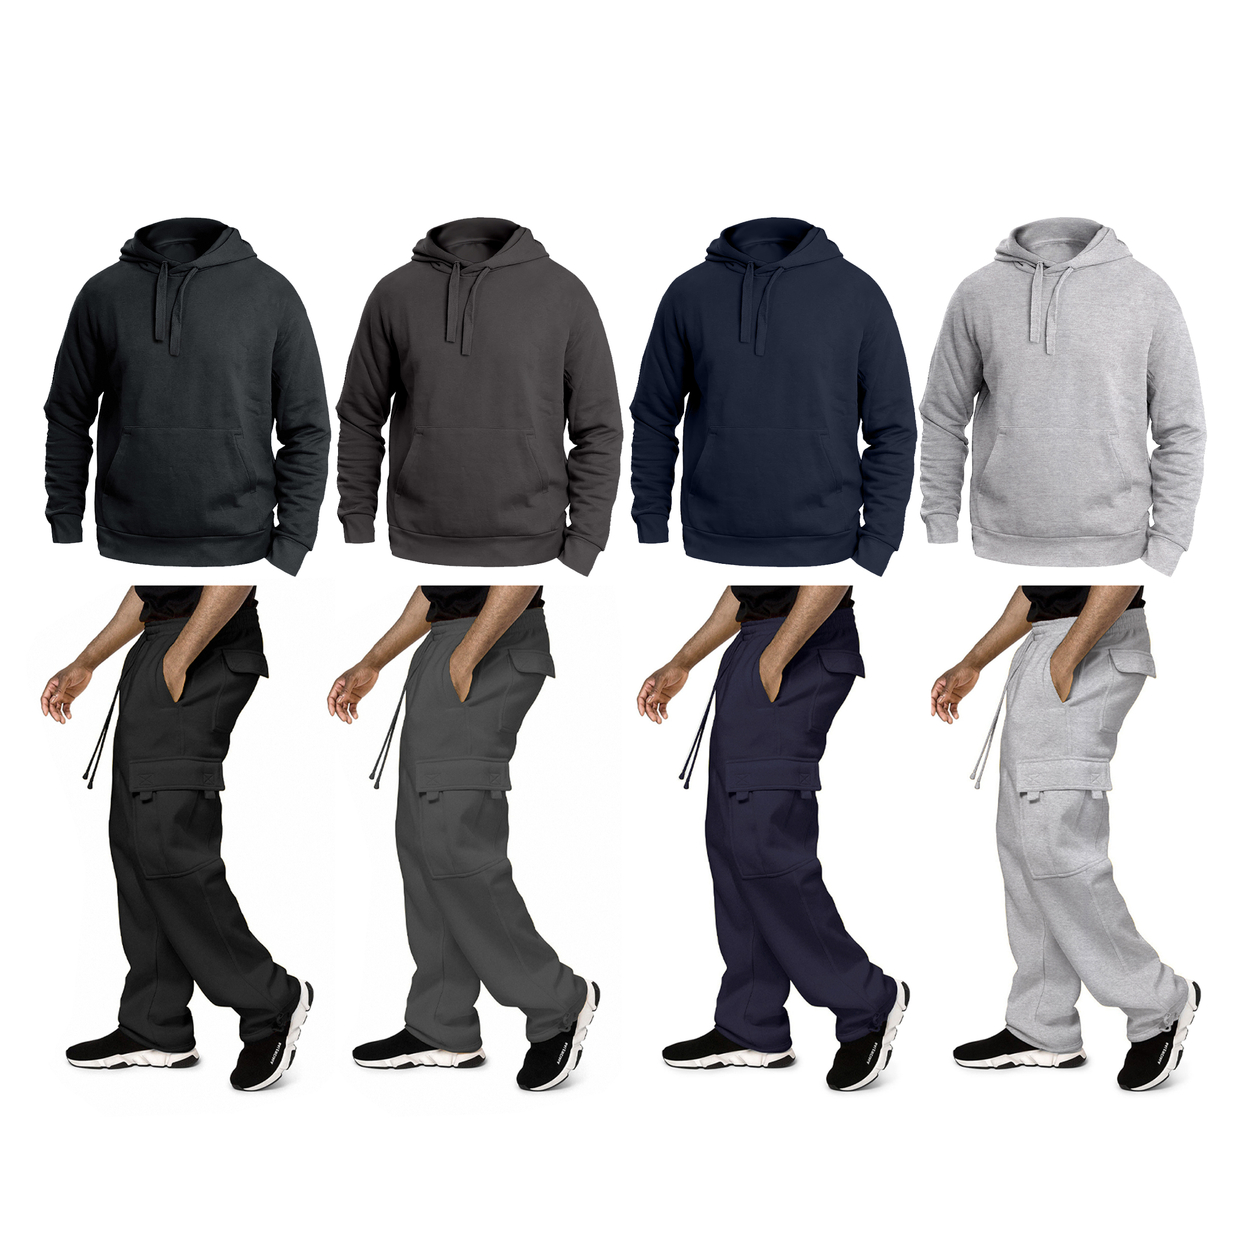 Multi-Pack: Big & Tall Men's Winter Warm Cozy Athletic Fleece Lined Multi-Pocket Cargo Sweatsuit - Grey, 1-pack, Large